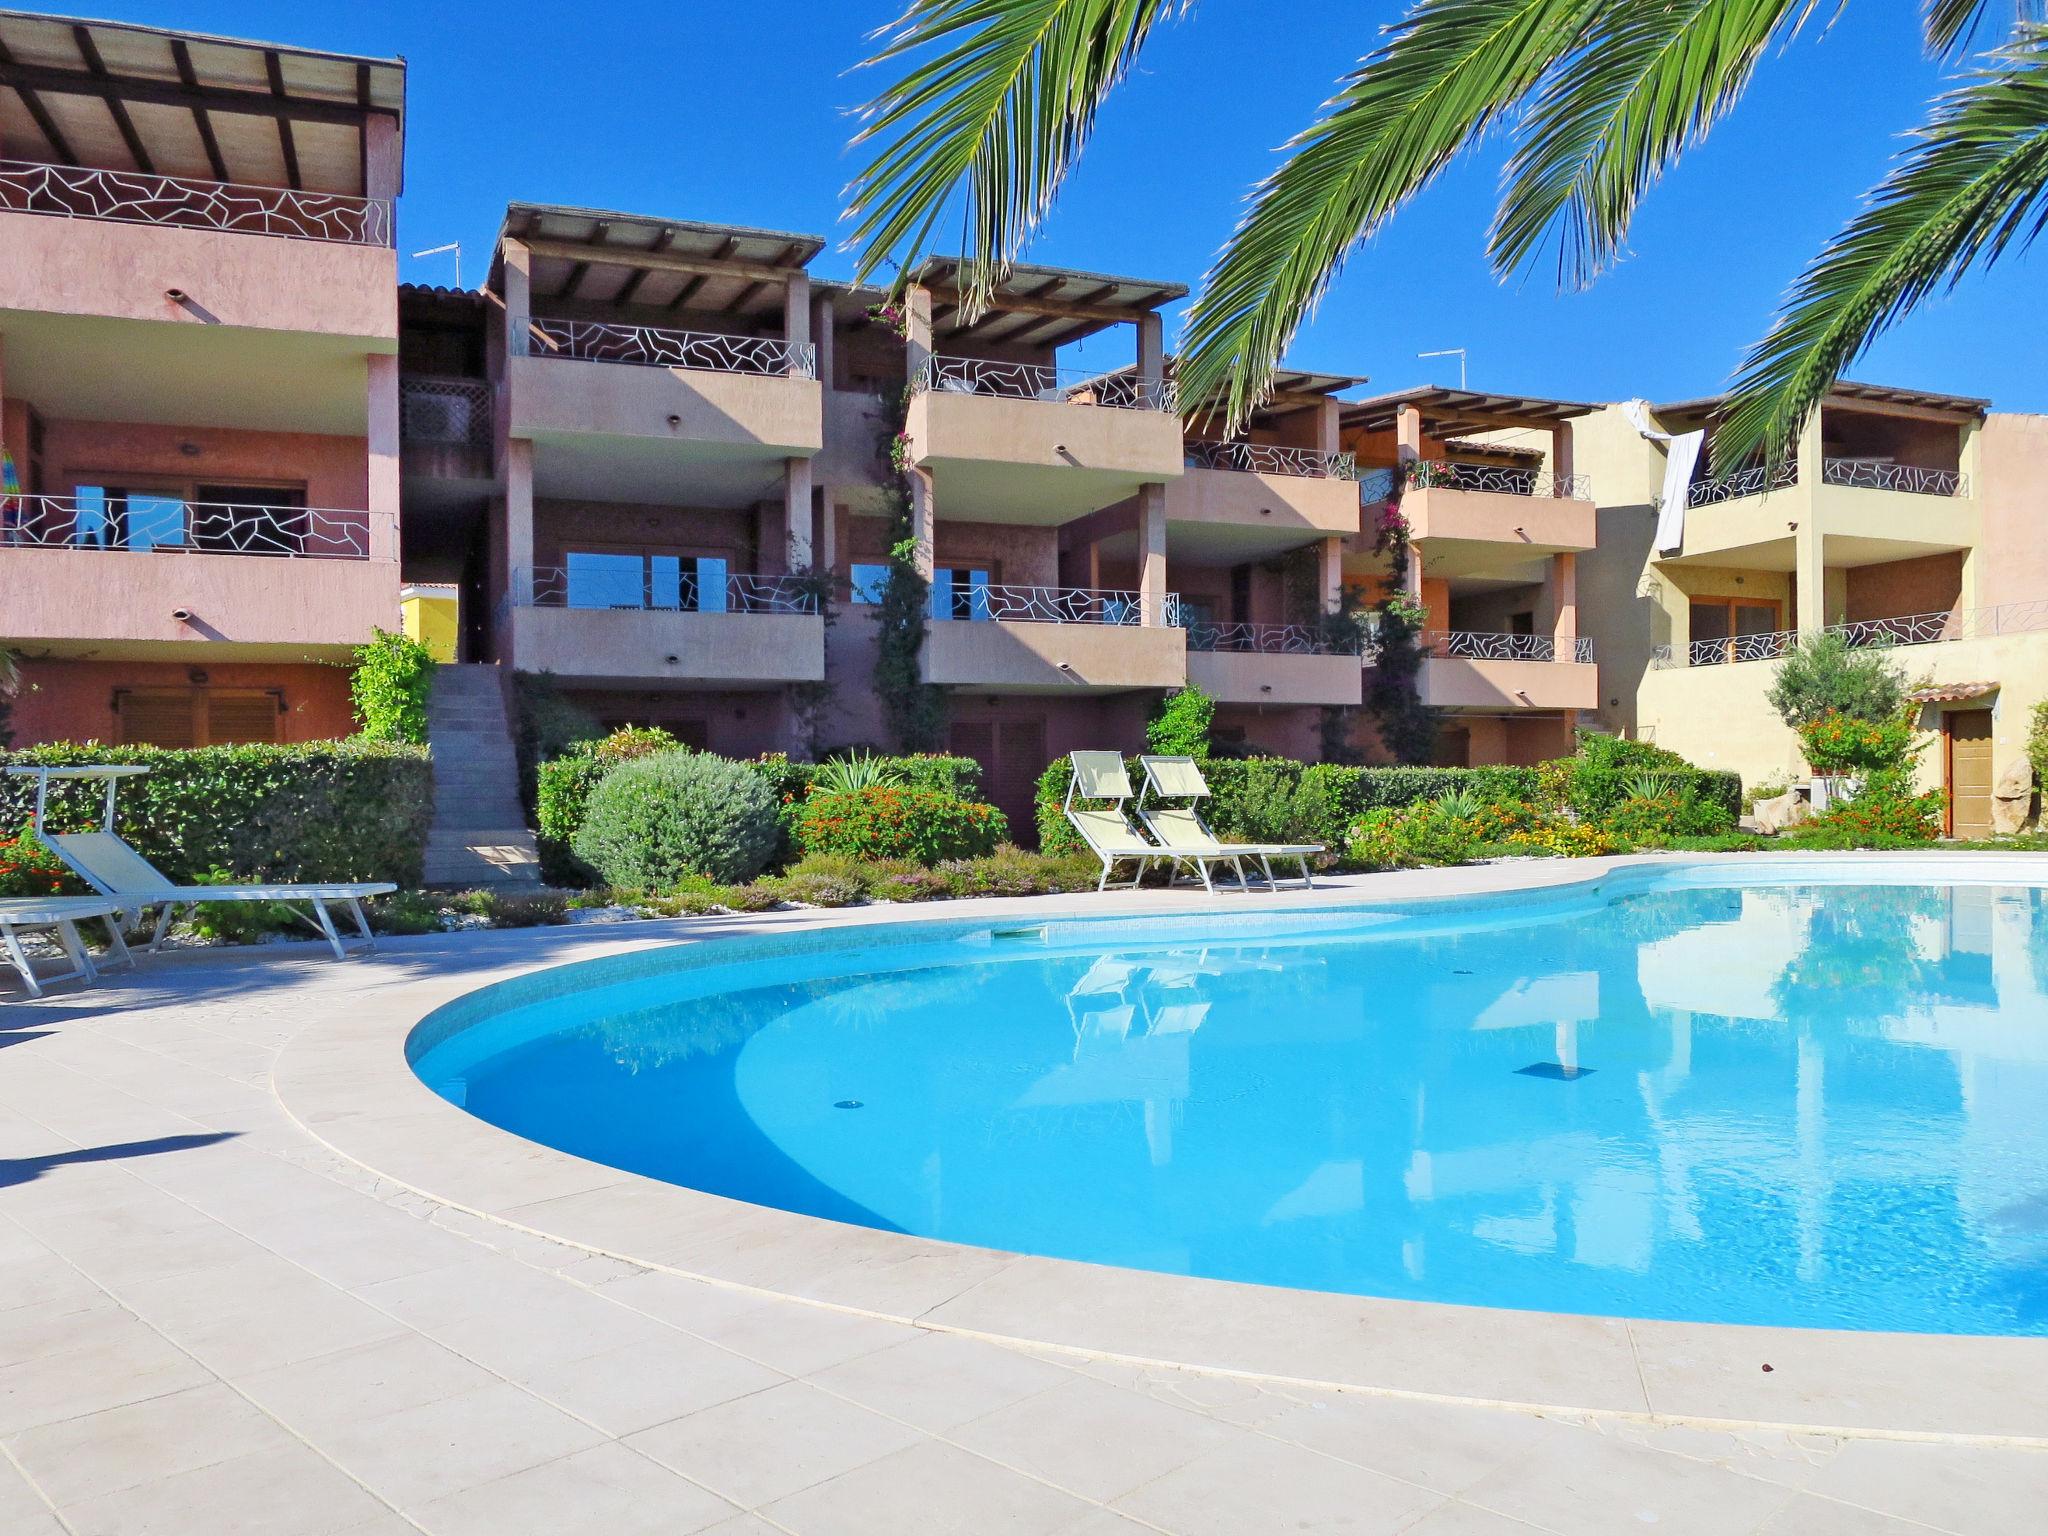 Photo 17 - Appartement de 1 chambre à Santa Teresa Gallura avec piscine et vues à la mer